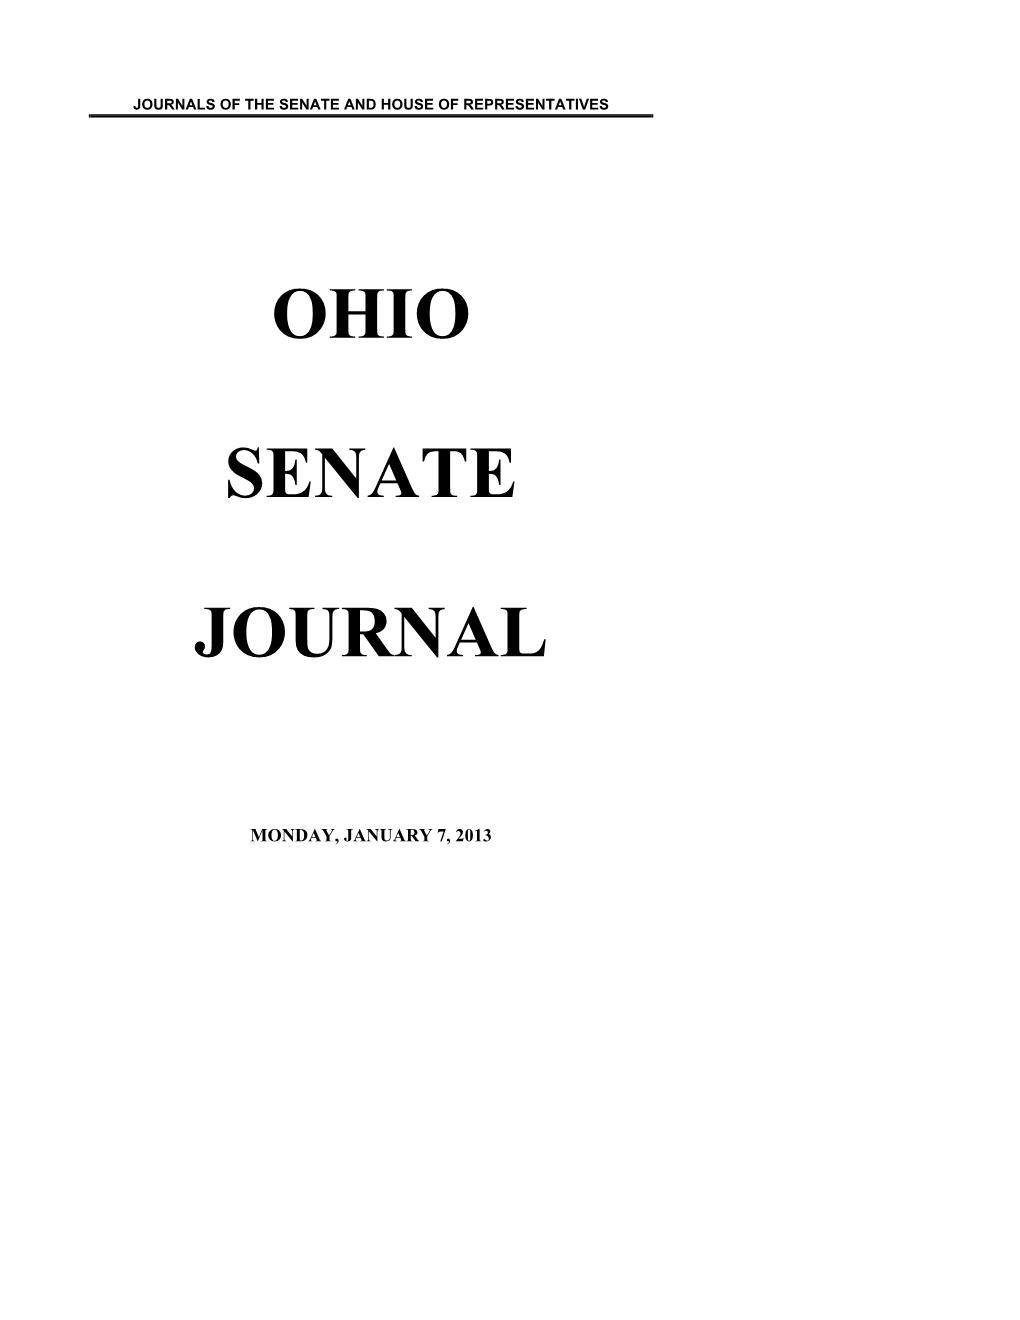 Ohio Senate Journal